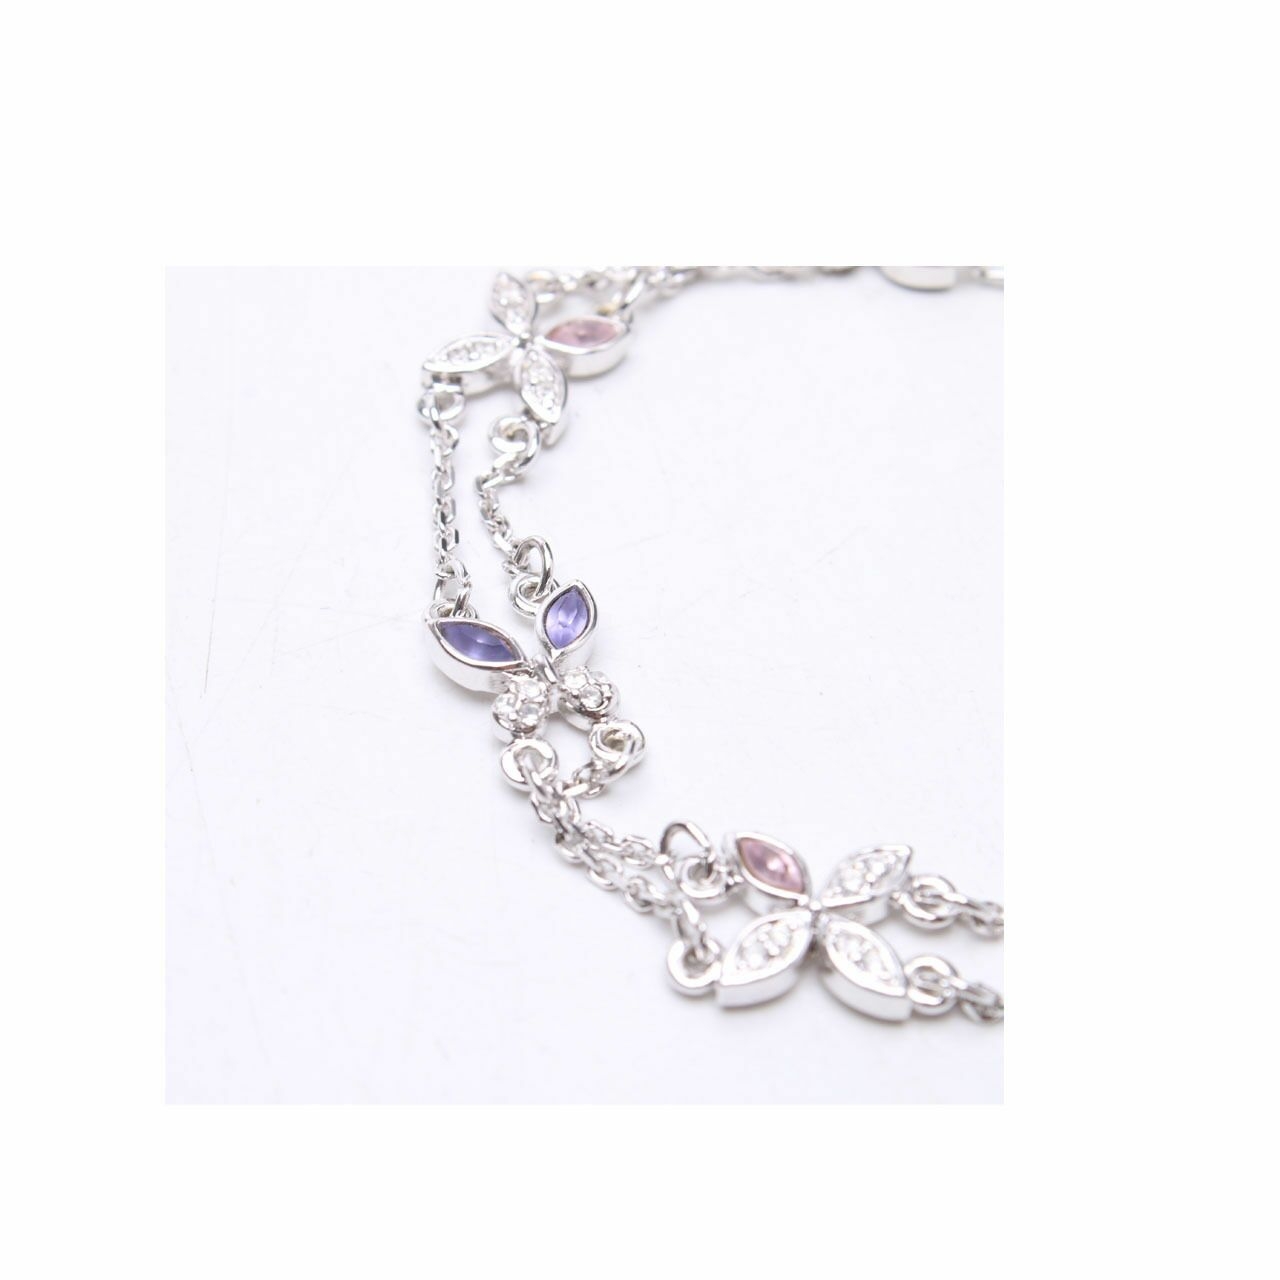 Swarovski Silver Bracelet Jewelery 